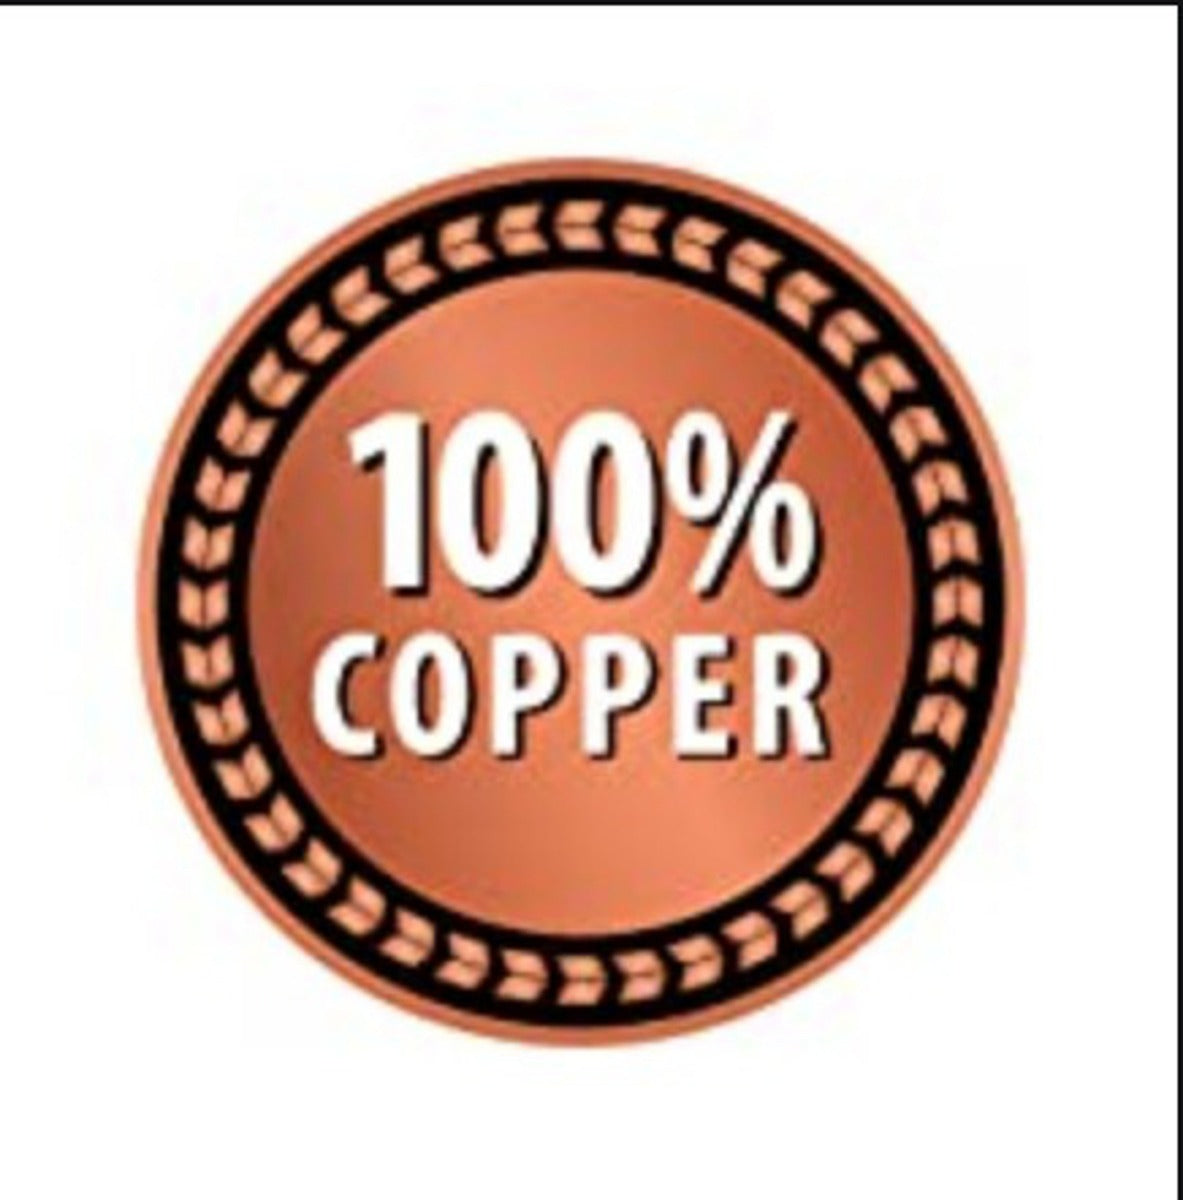 CR19 Copper Ring 'Celtic'